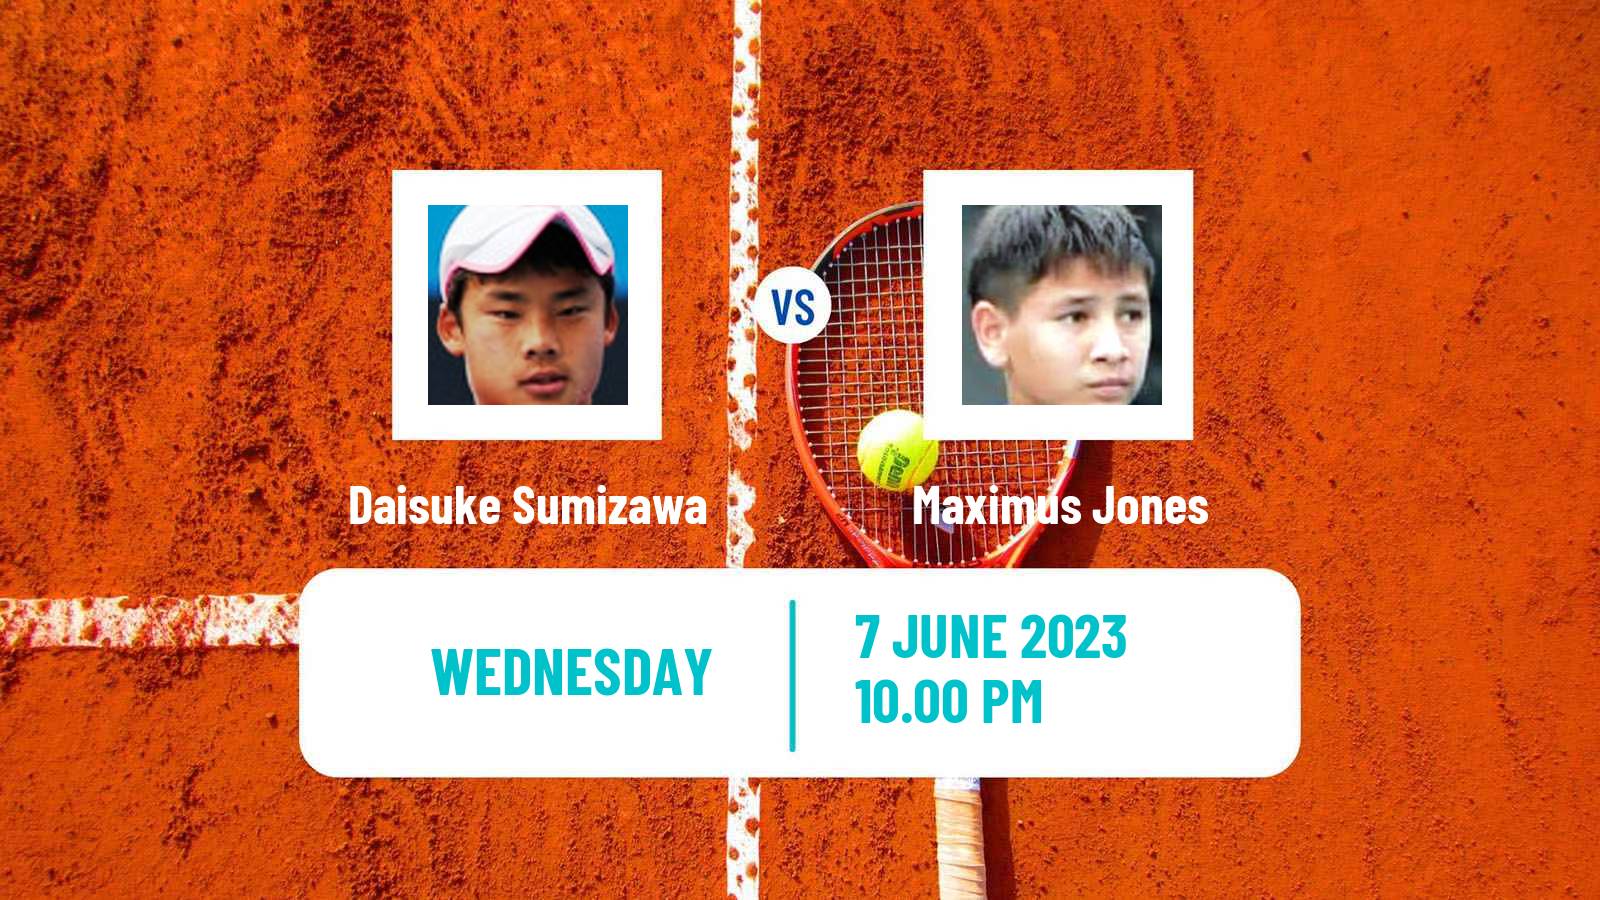 Tennis ITF M15 Nakhon Si Thammarat 2 Men Daisuke Sumizawa - Maximus Jones